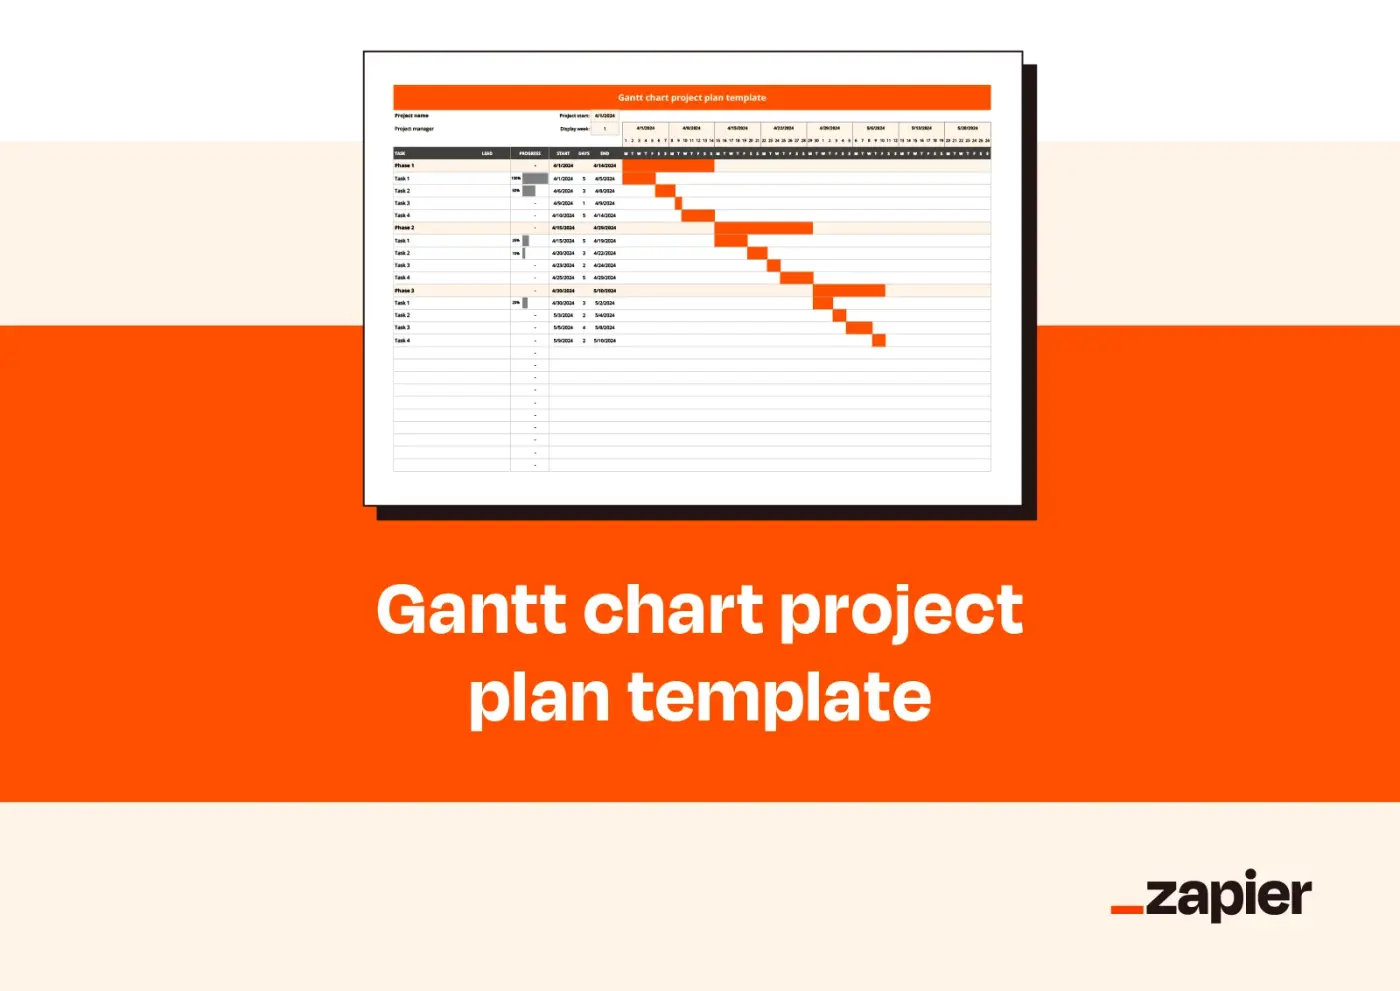 Mockup showcasing Zapier's Gantt chart template